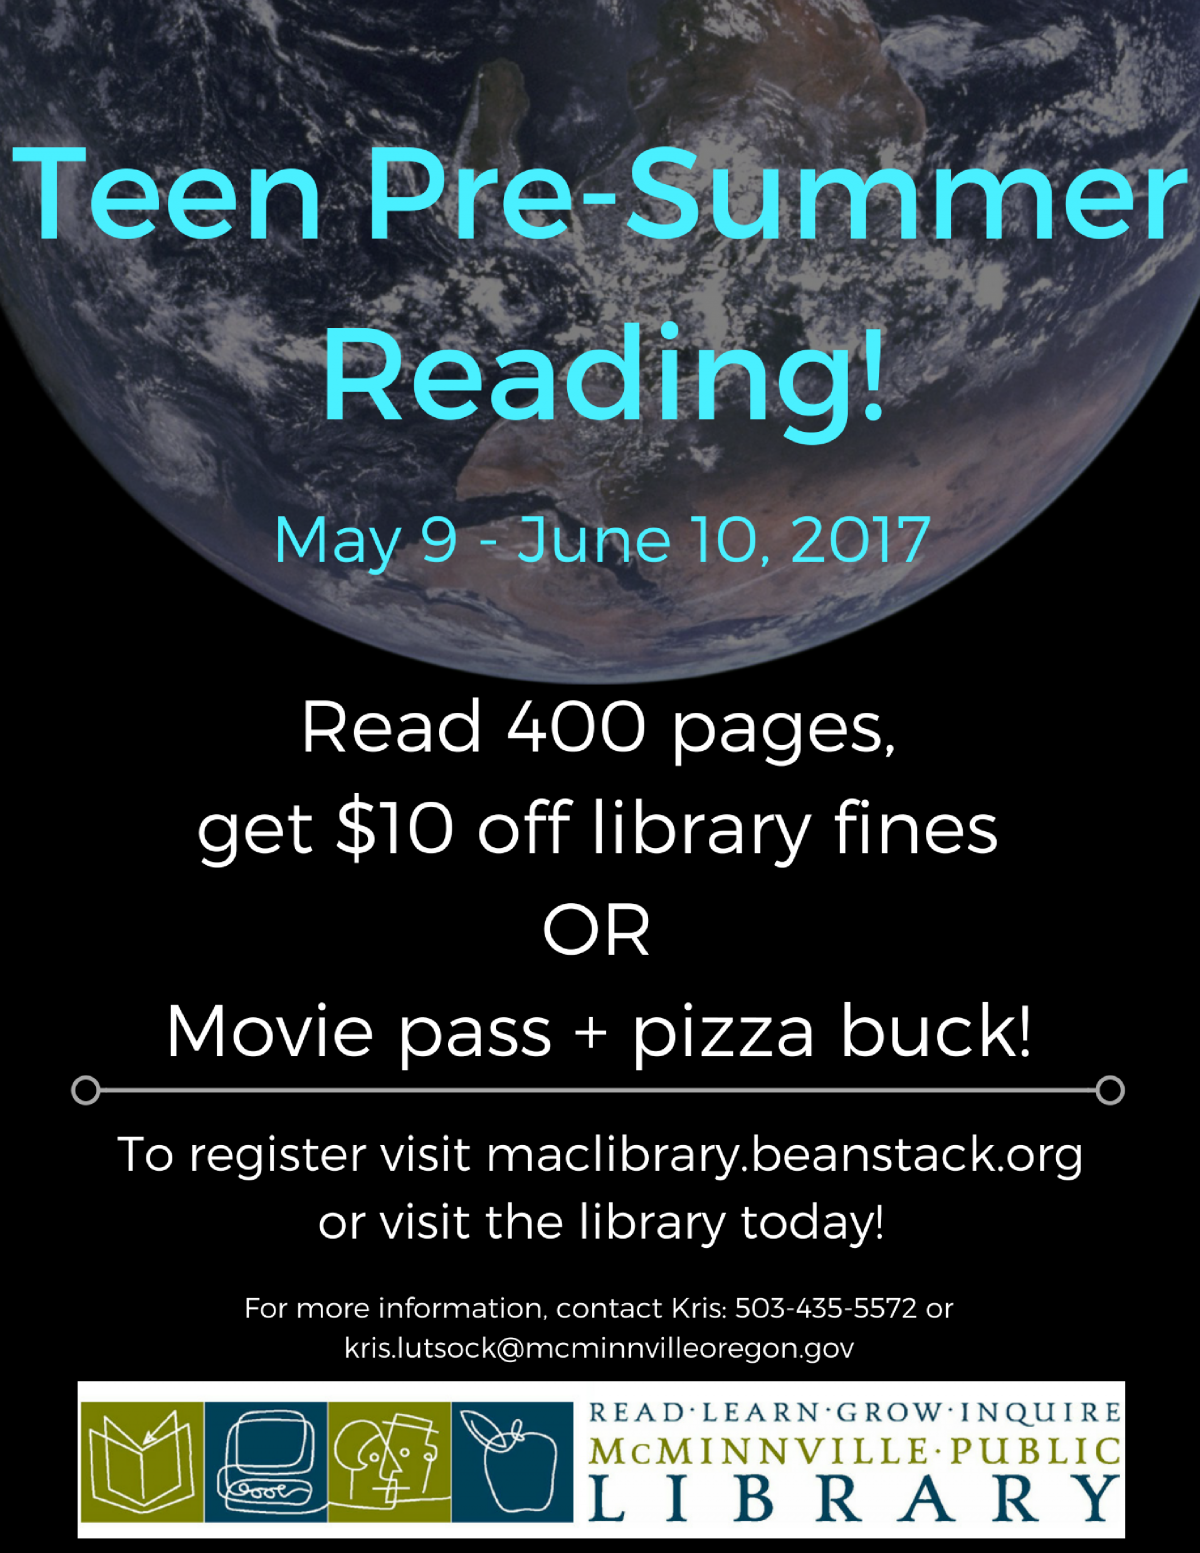 Teen Pre-Summer Reading flyer